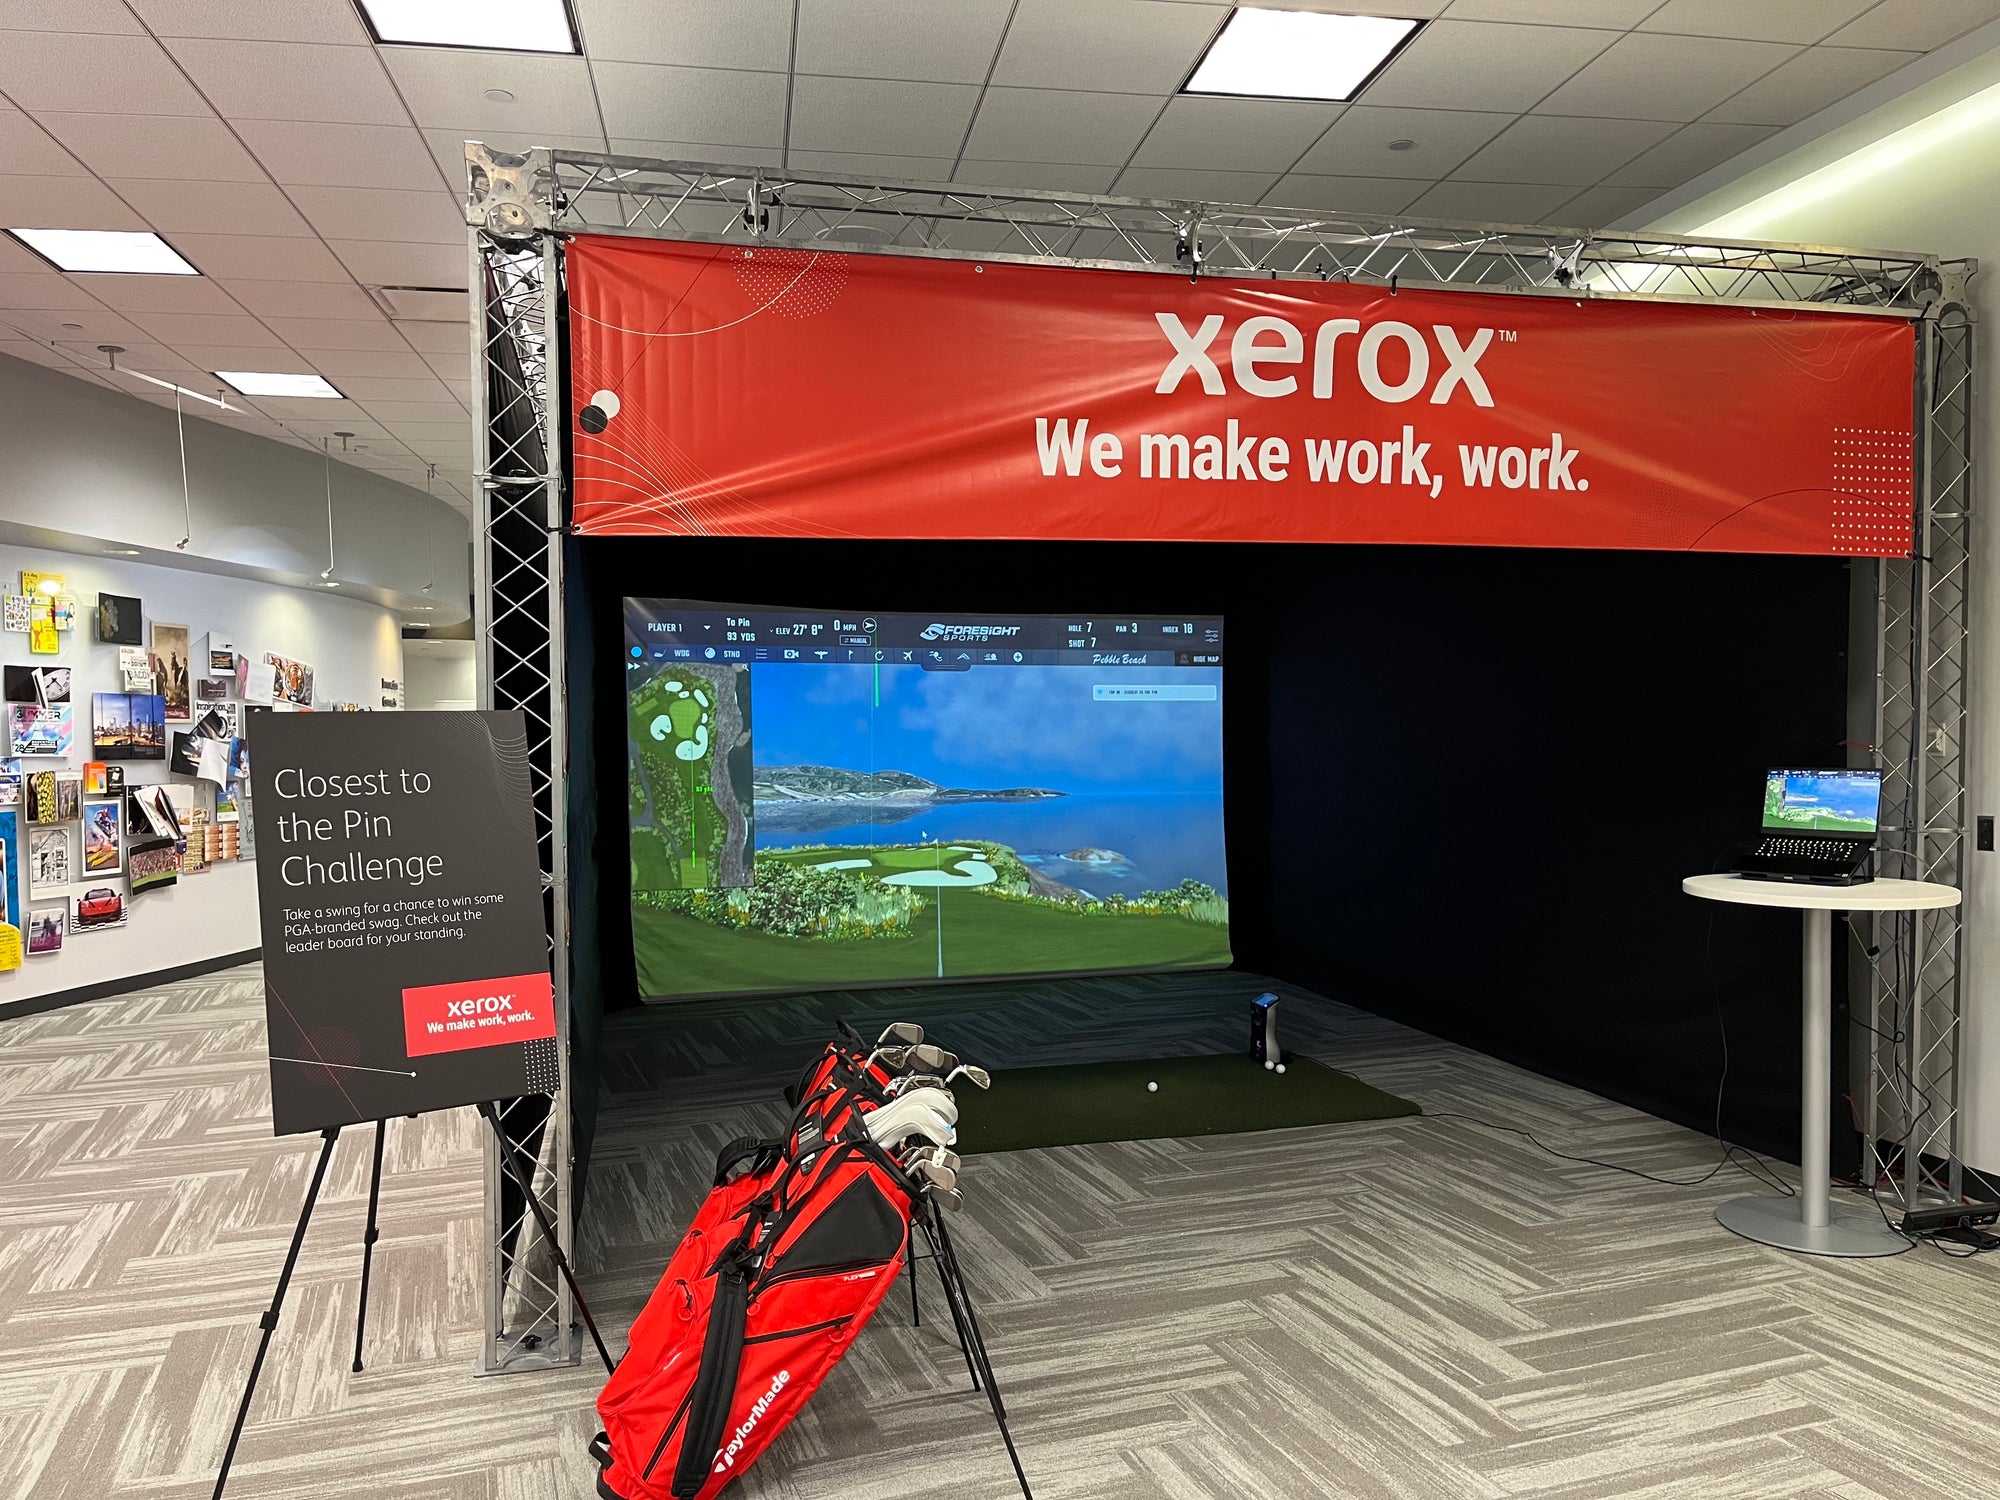 Xerox Golf Simulator Rental for Corporate Event